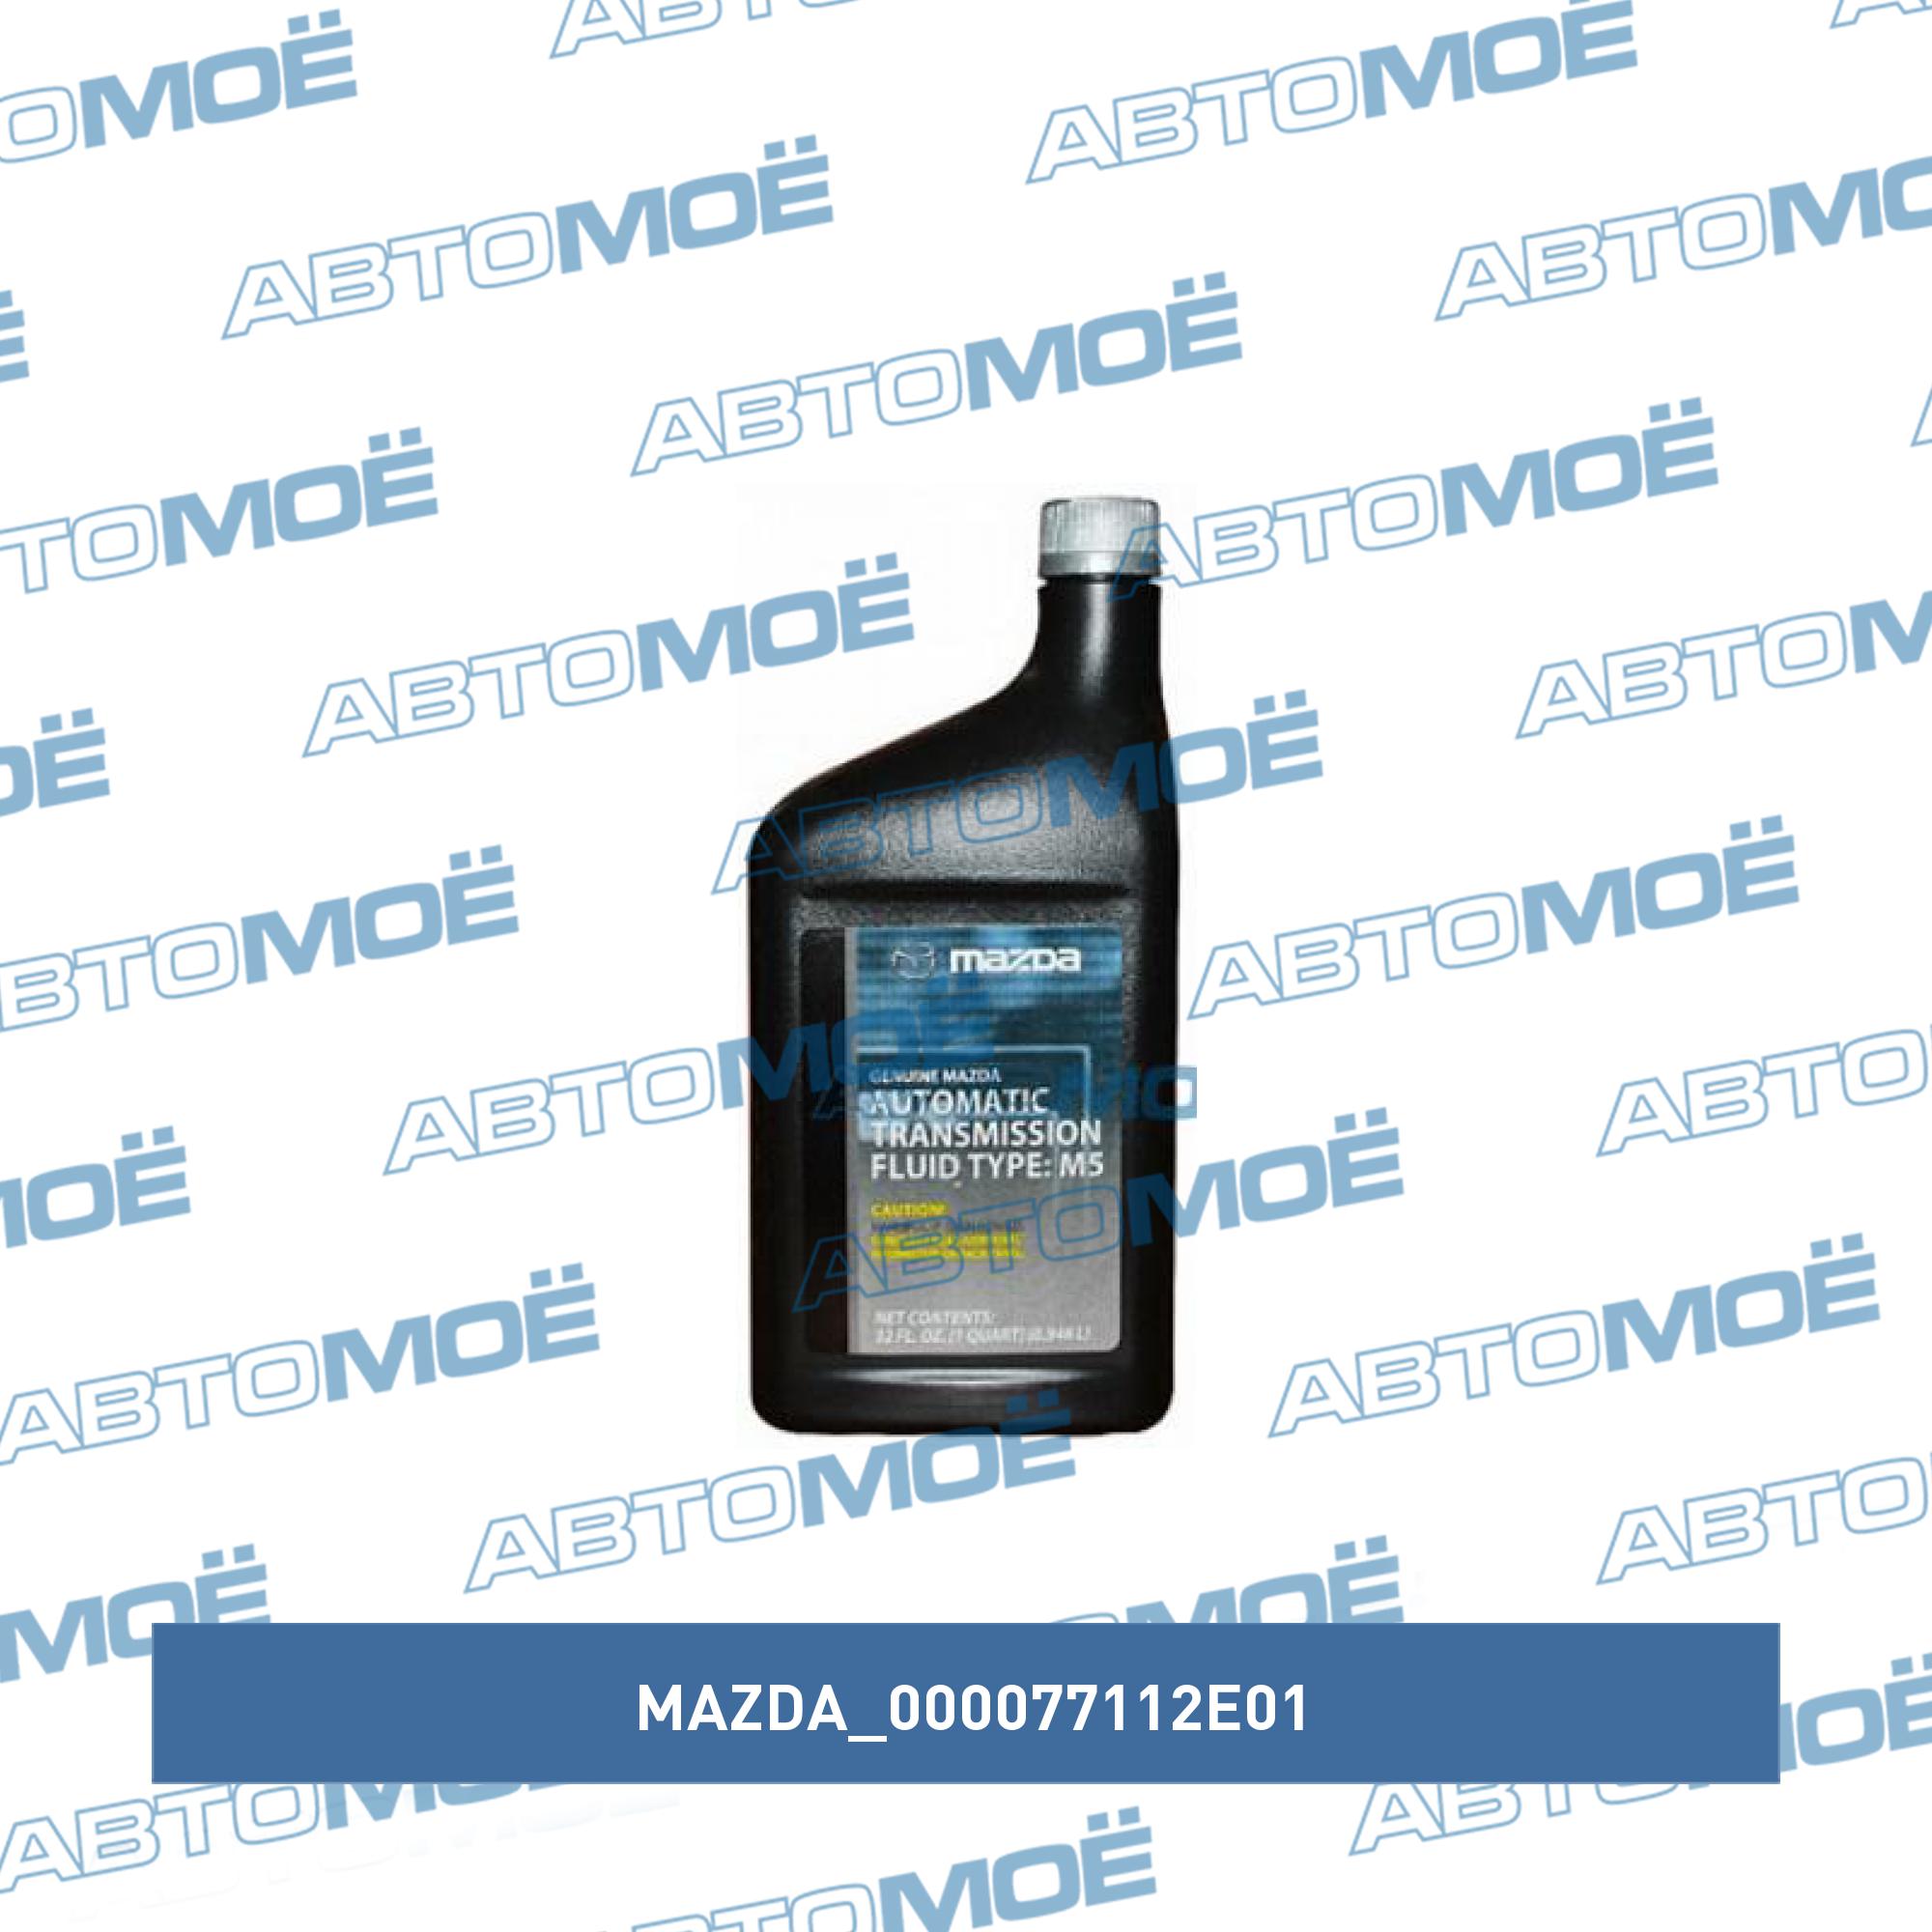 Масло трансмиссионное Mazda ATF M-5 1л MAZDA 000077112E01